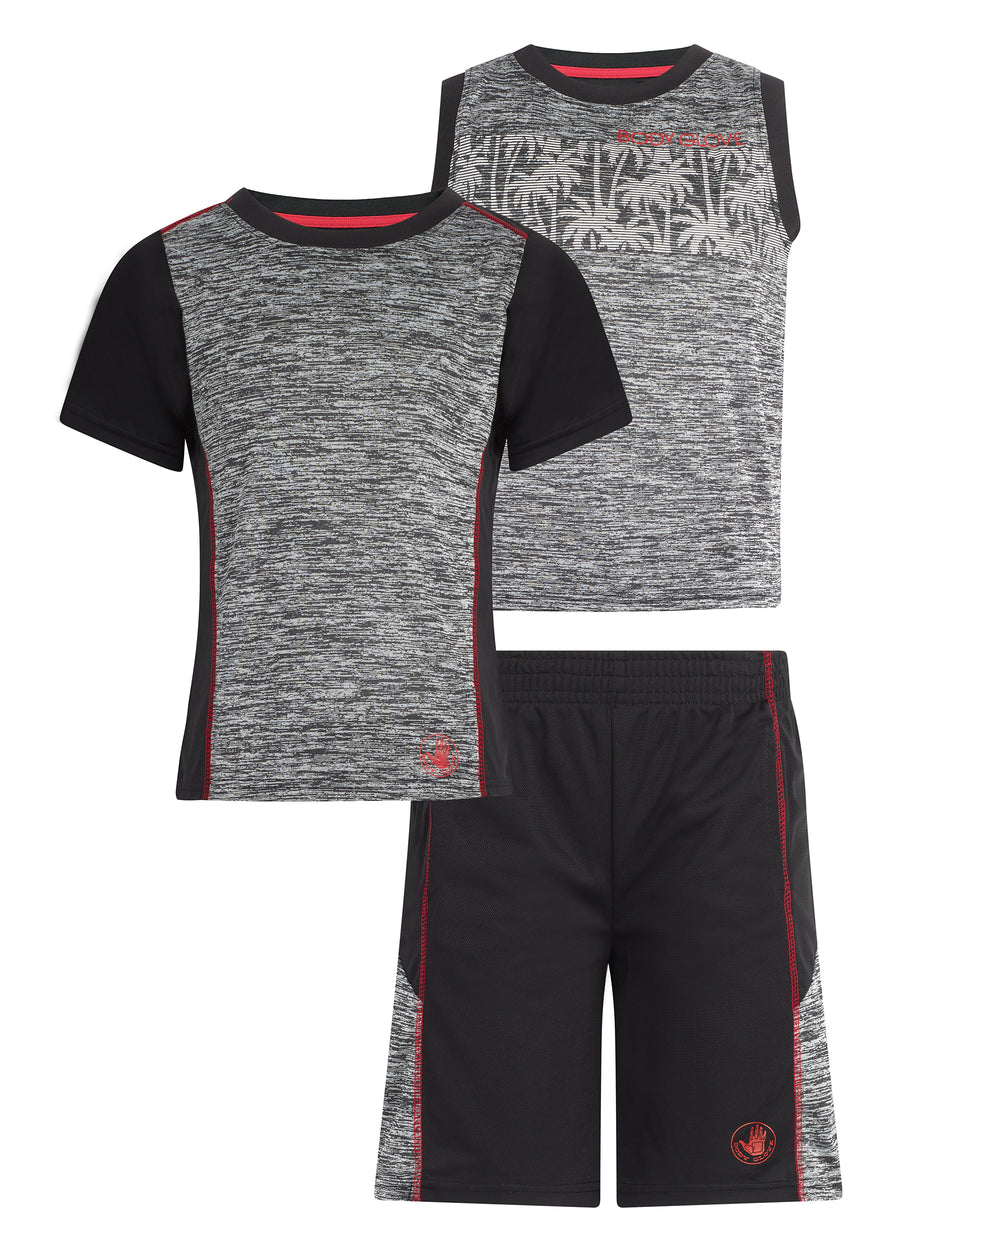 Boys' Three-Piece Shirts and Short Set (4-7) - Black & Red